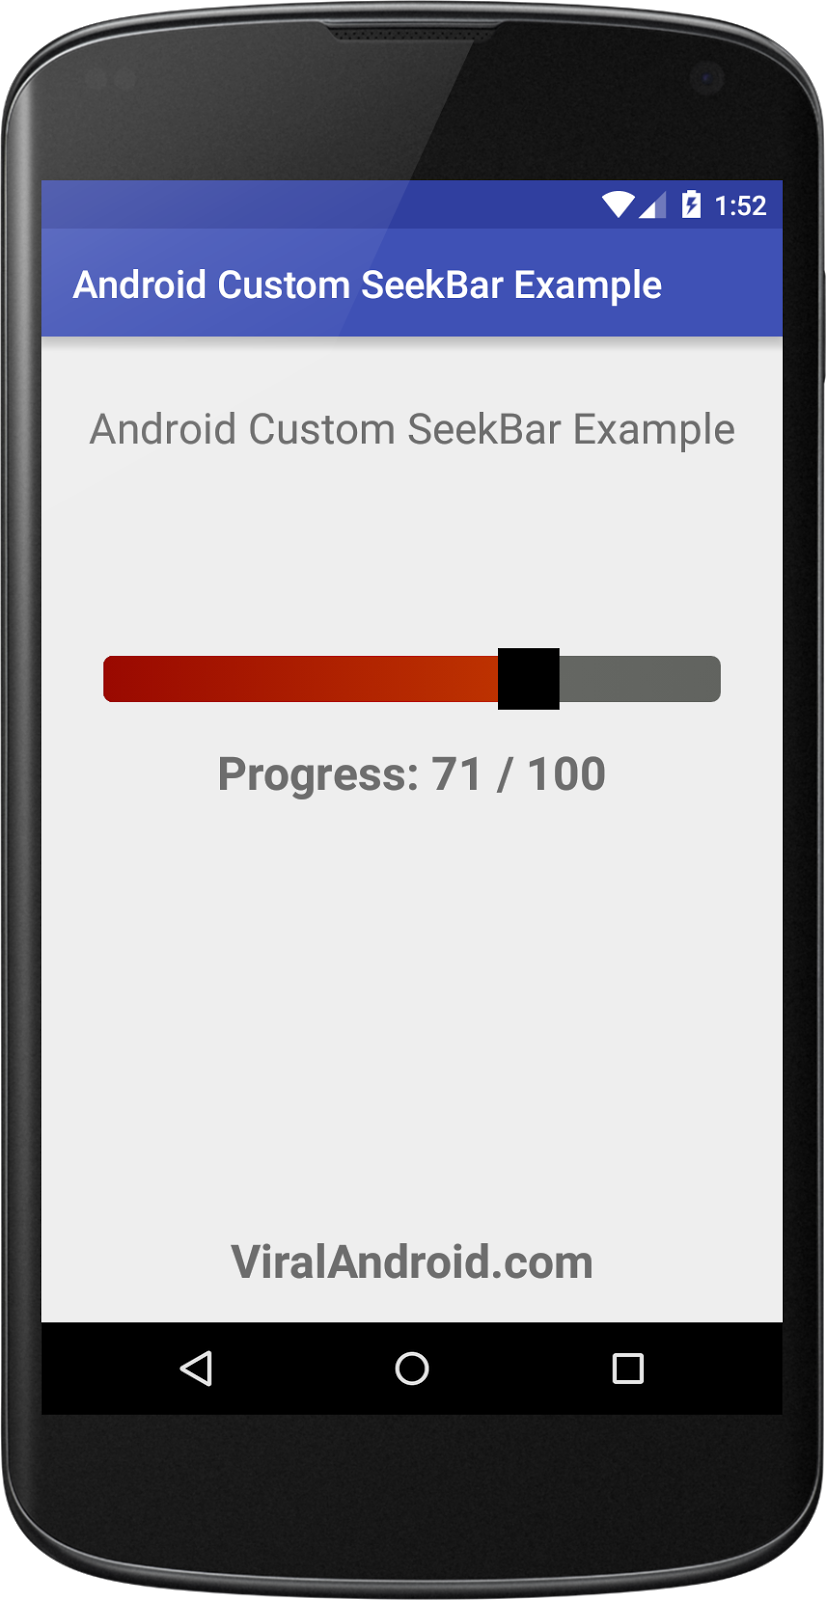 Android Custom SeekBar Example